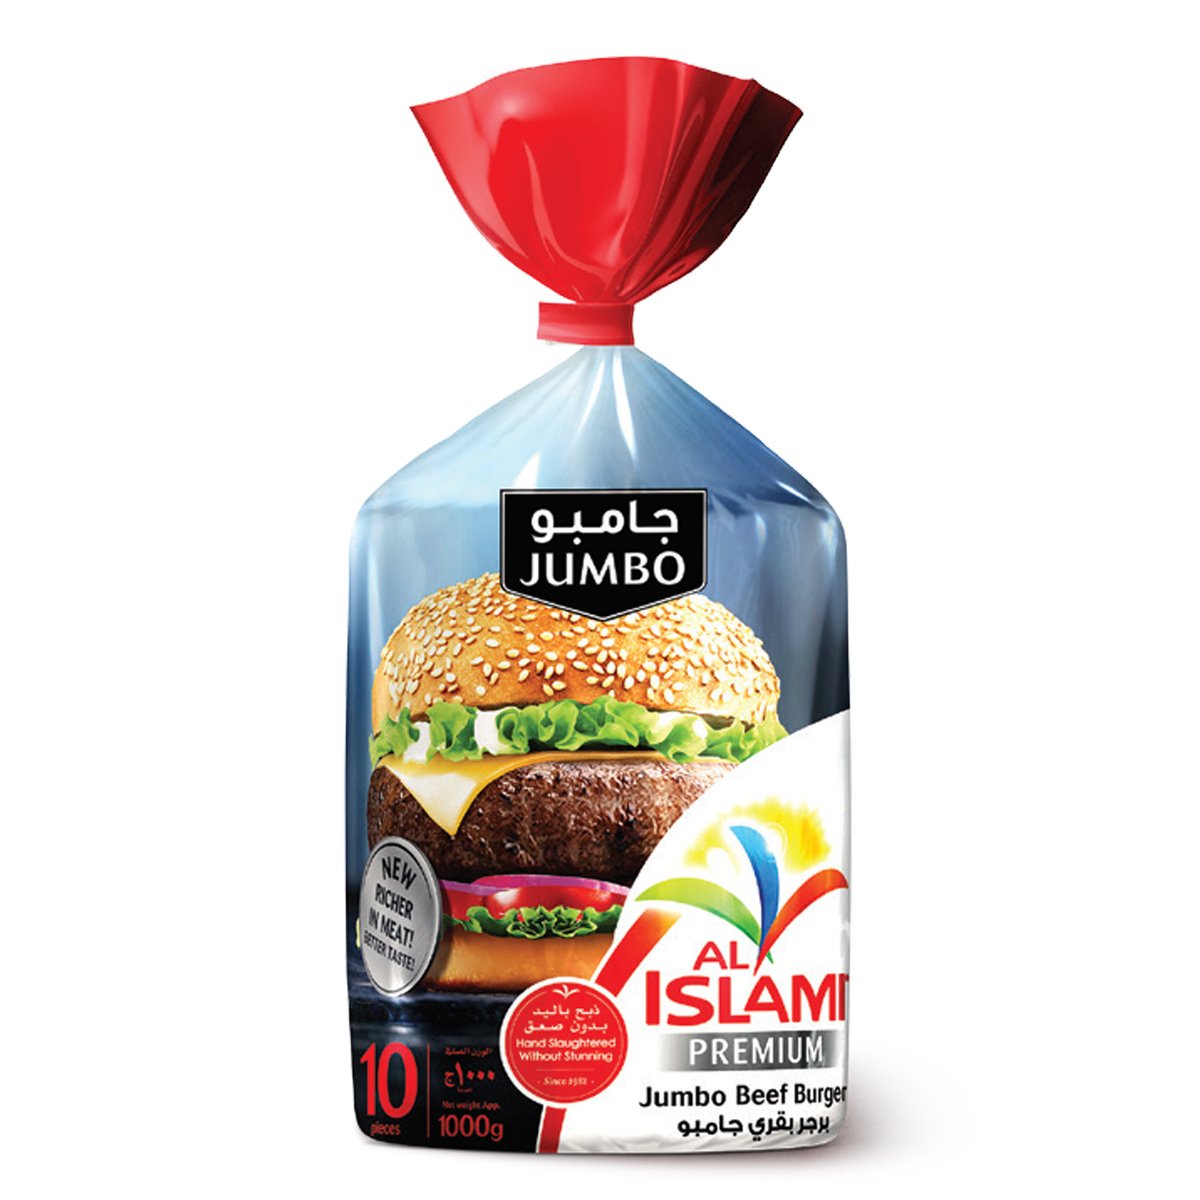 Al Islami Premium Jumbo Beef Burger 1kg